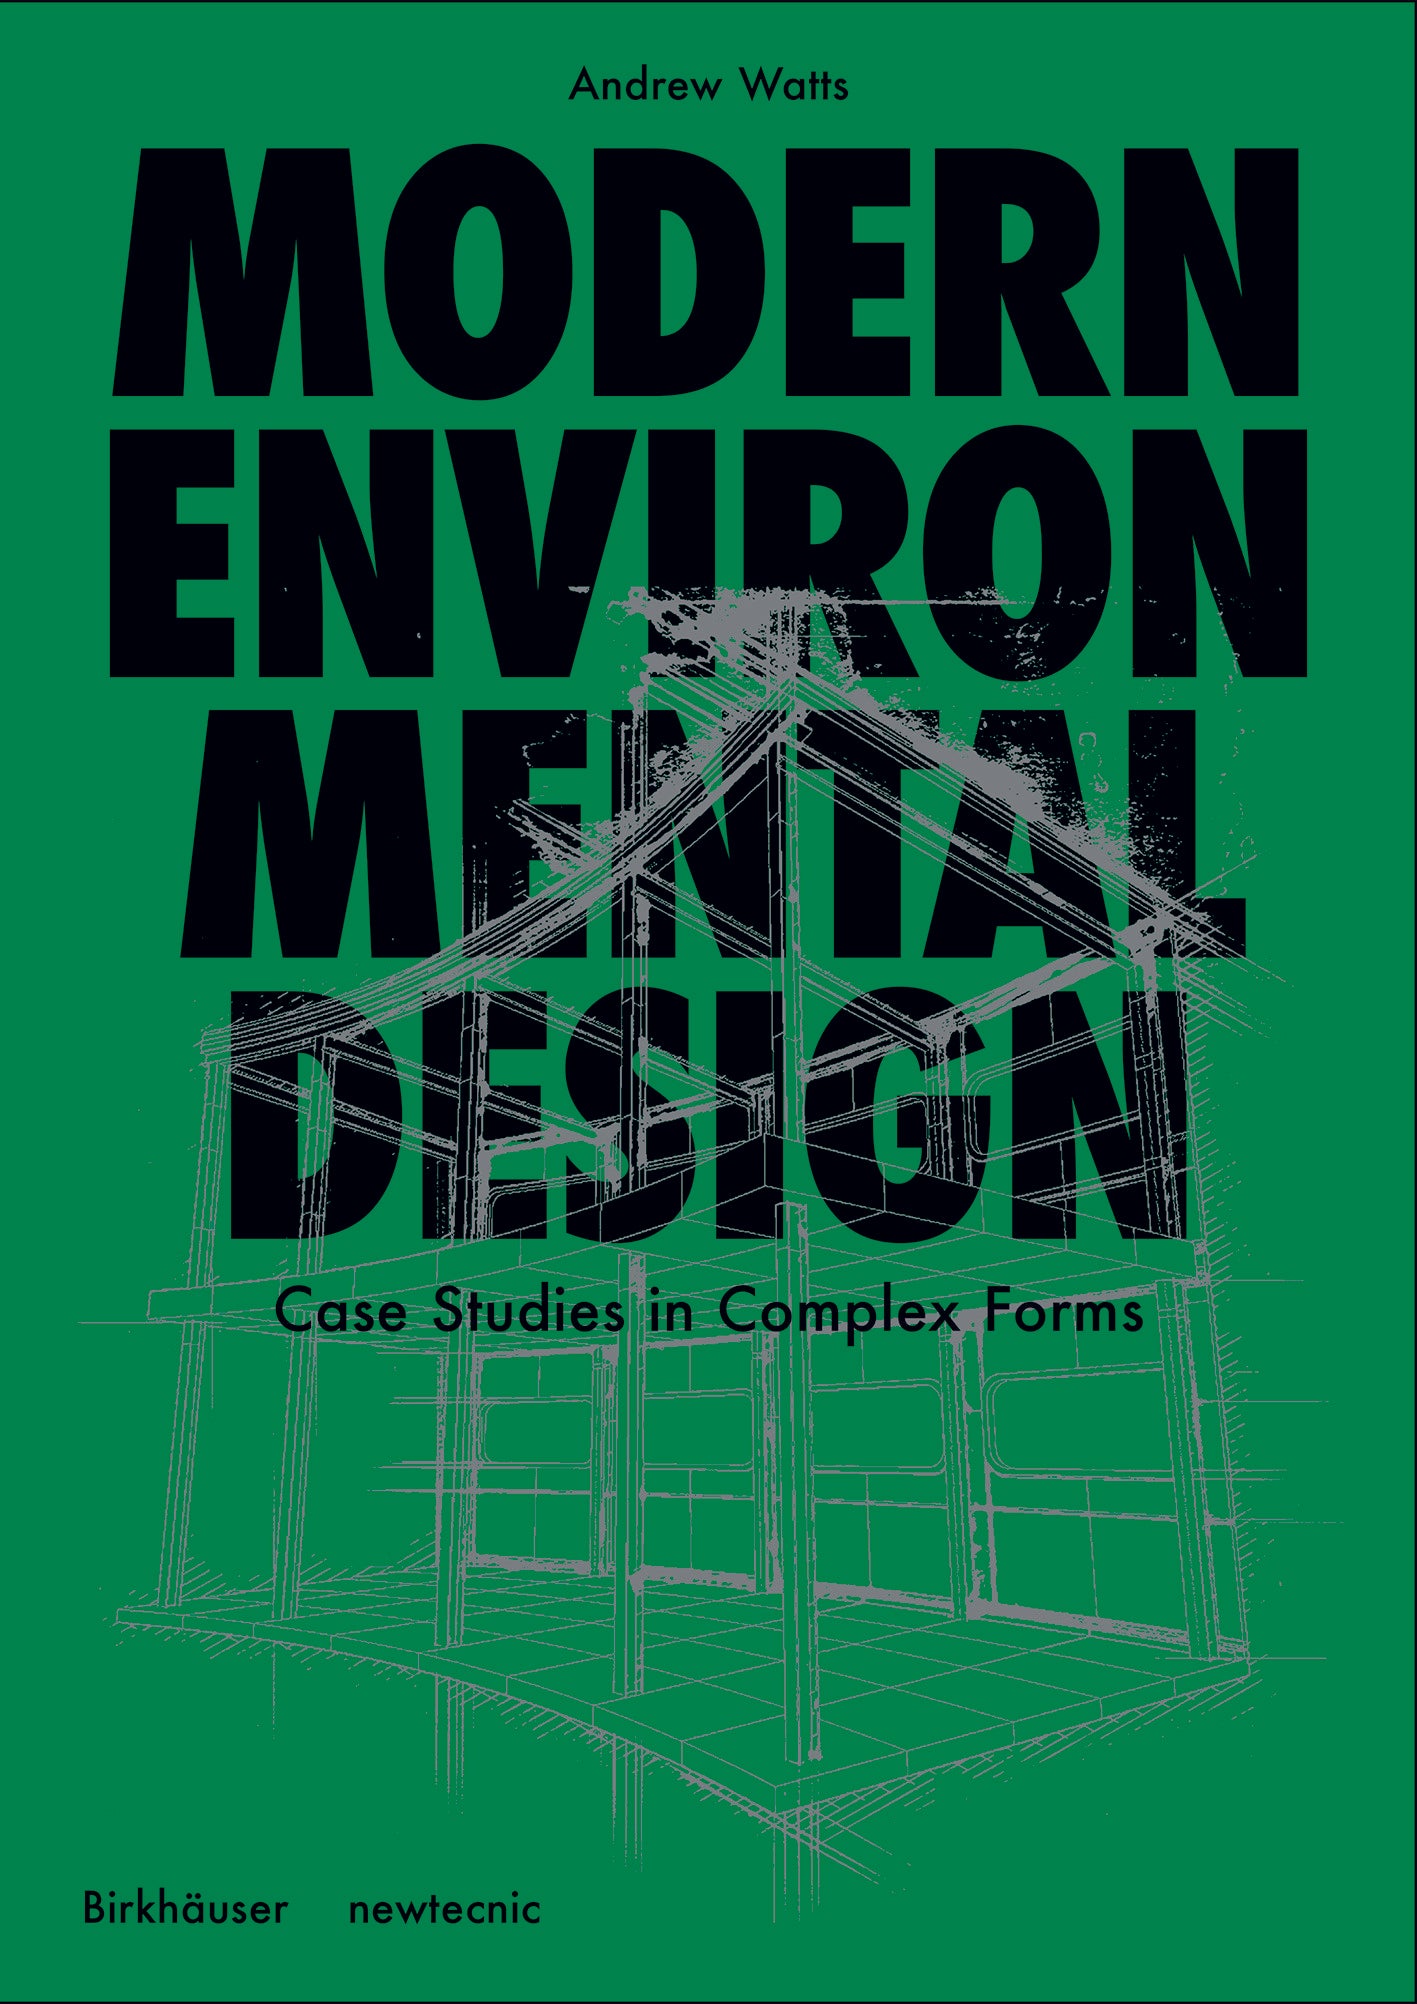 Modern Environmental Design (HB edition) cover